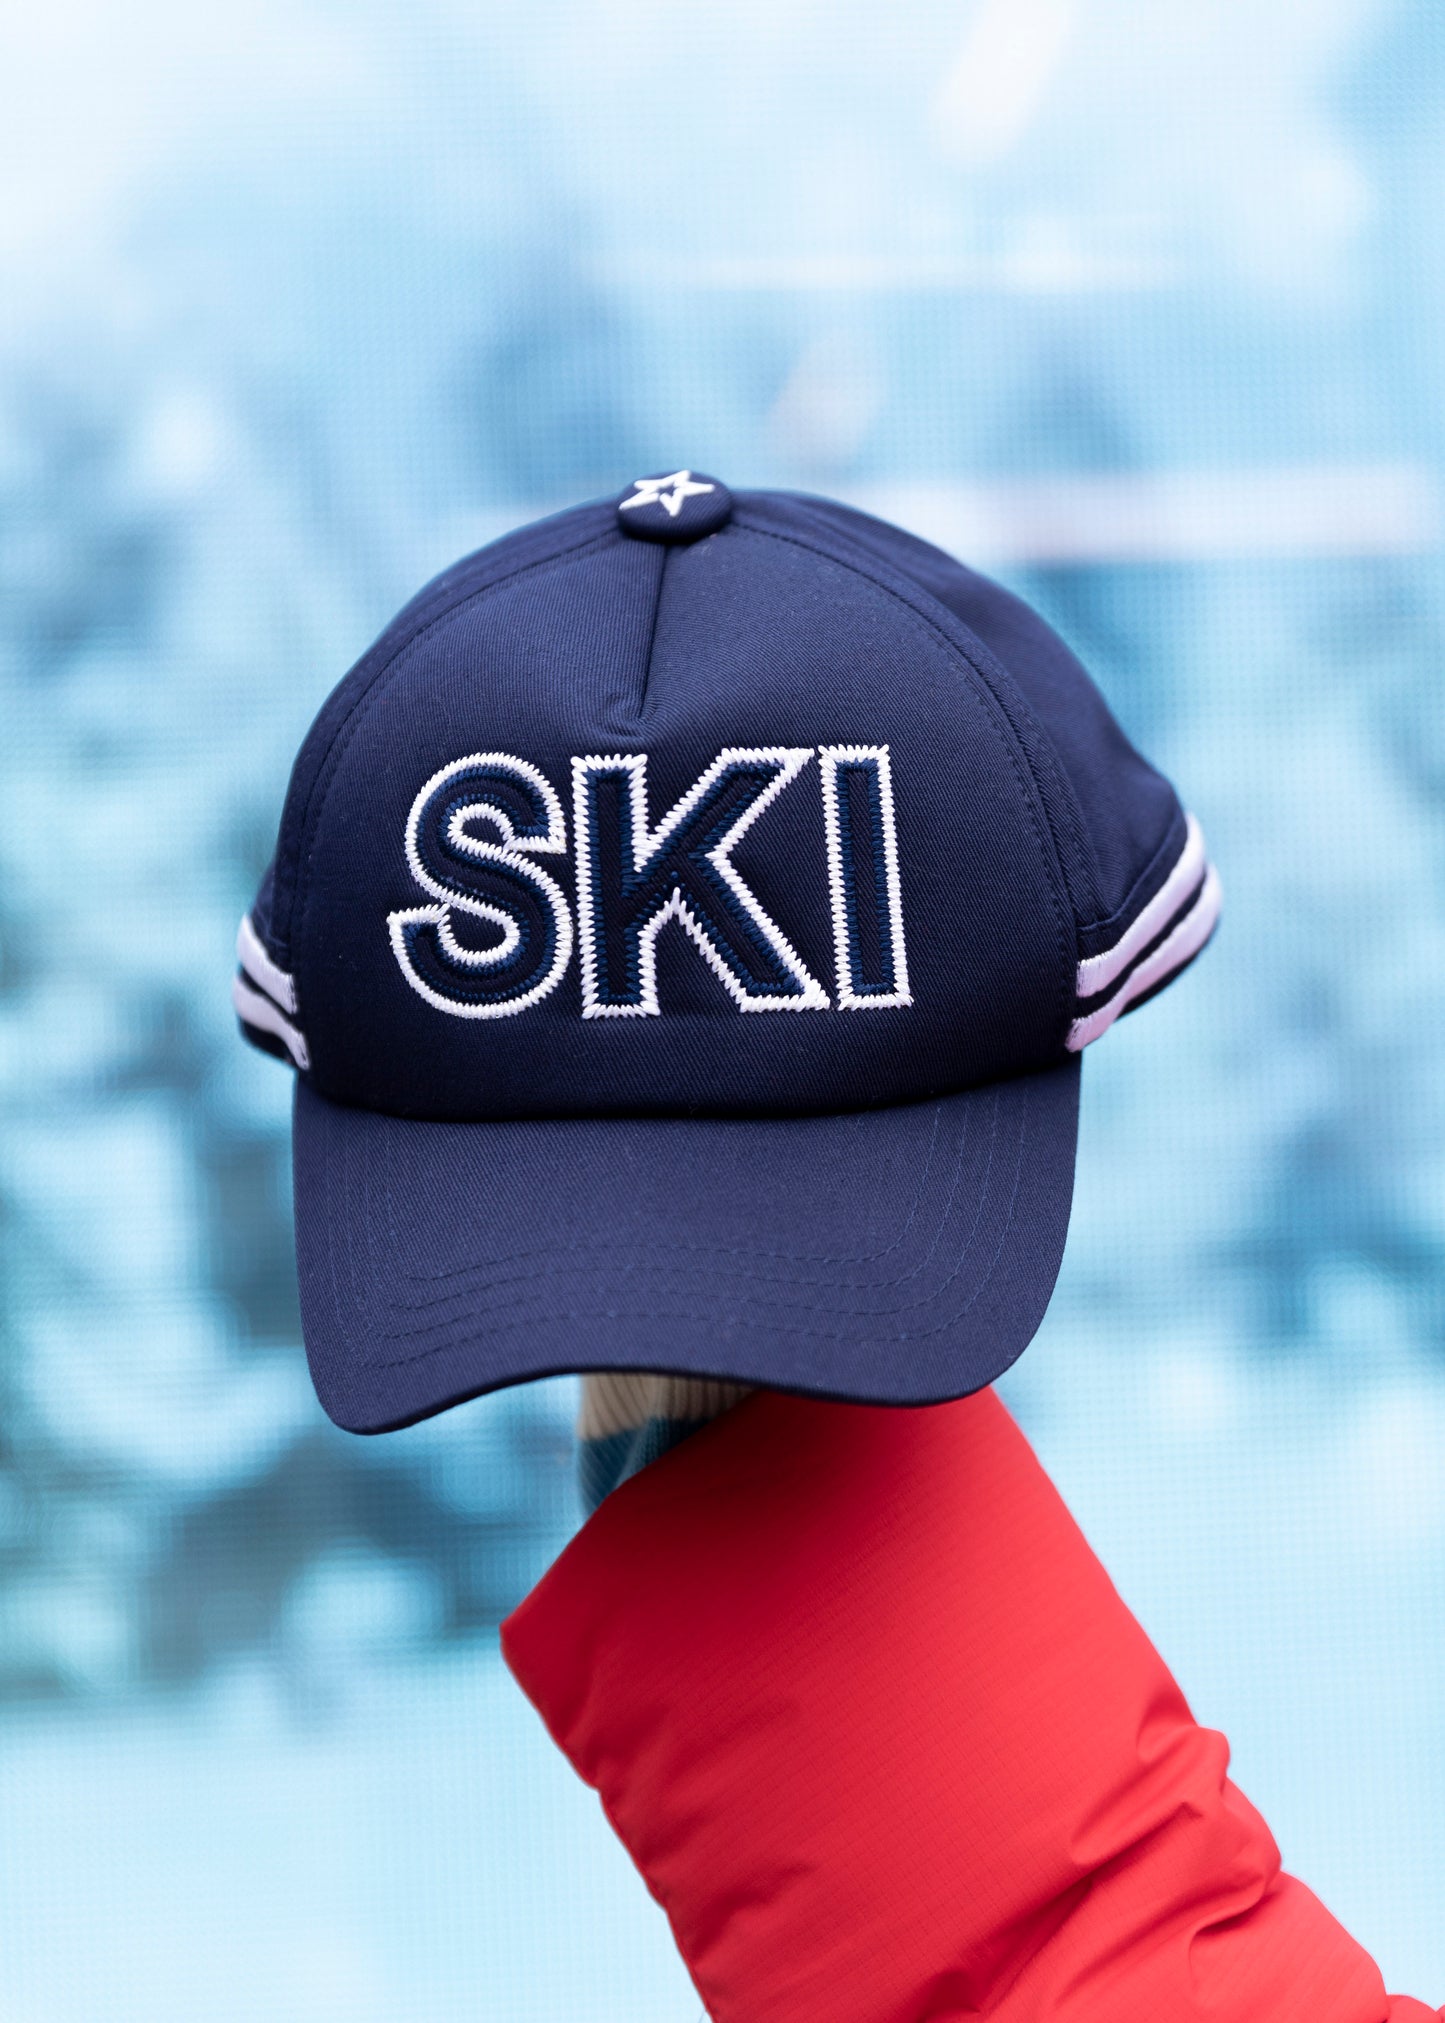 Ski Cap, Navy Snow White, Cap